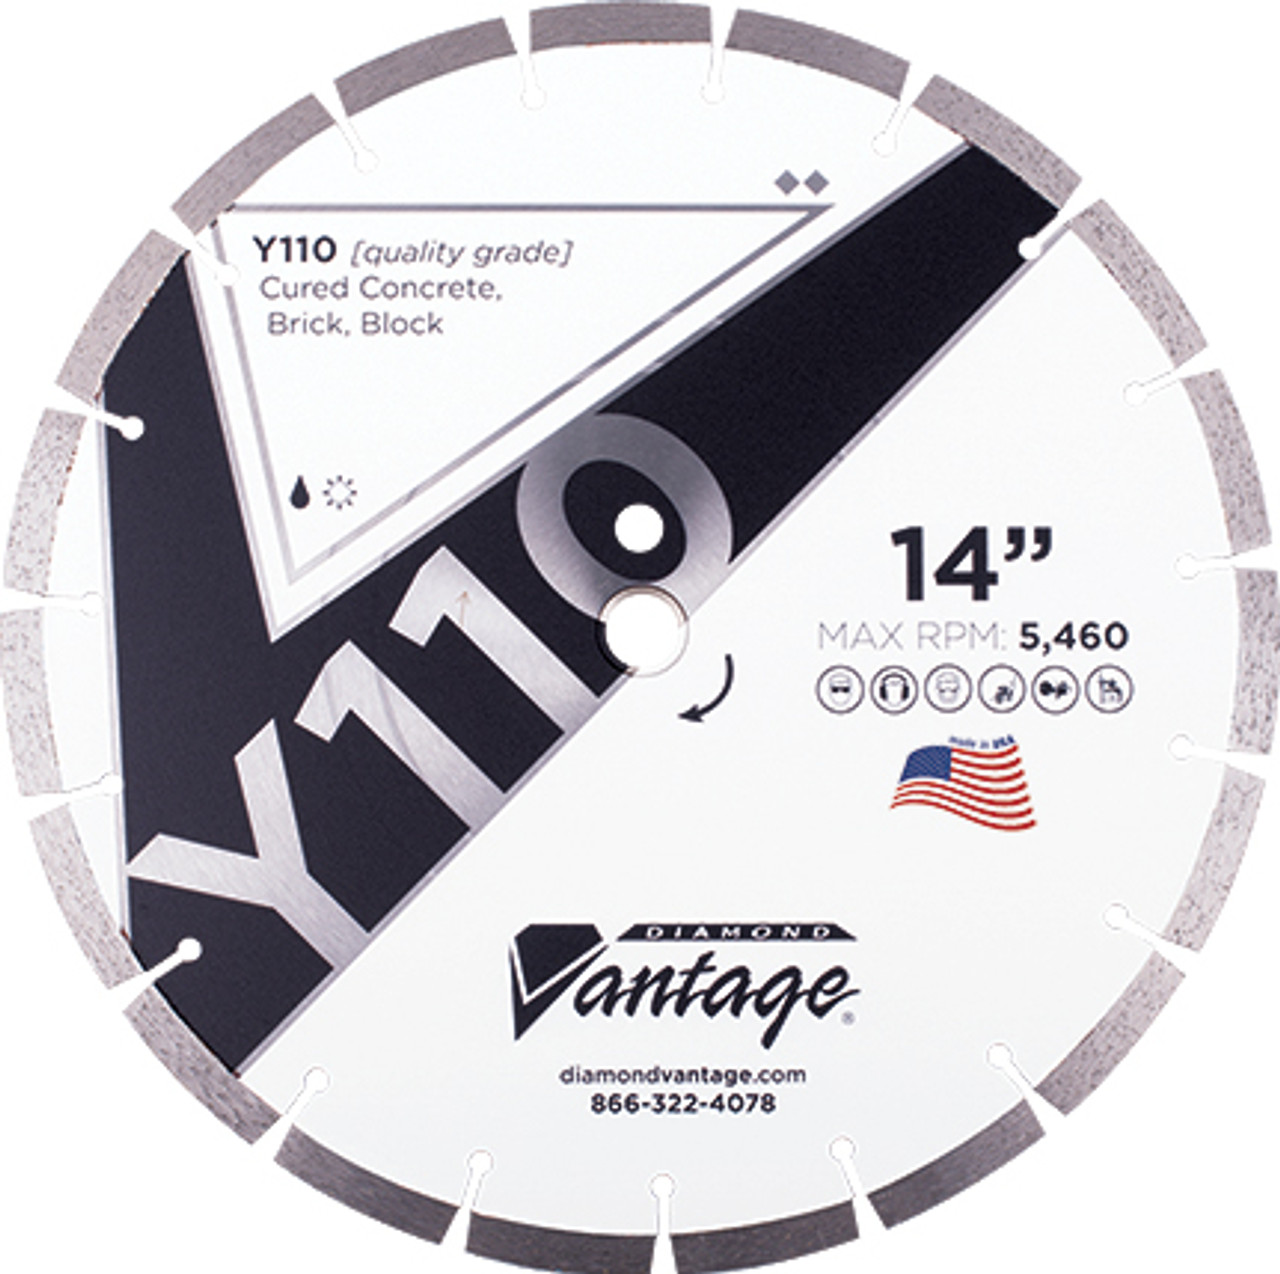 Diamond Vantage Y110 SERIES 12 x .125 x 20mm Conc/Mas, Value Plus Grade, Segmented Blade